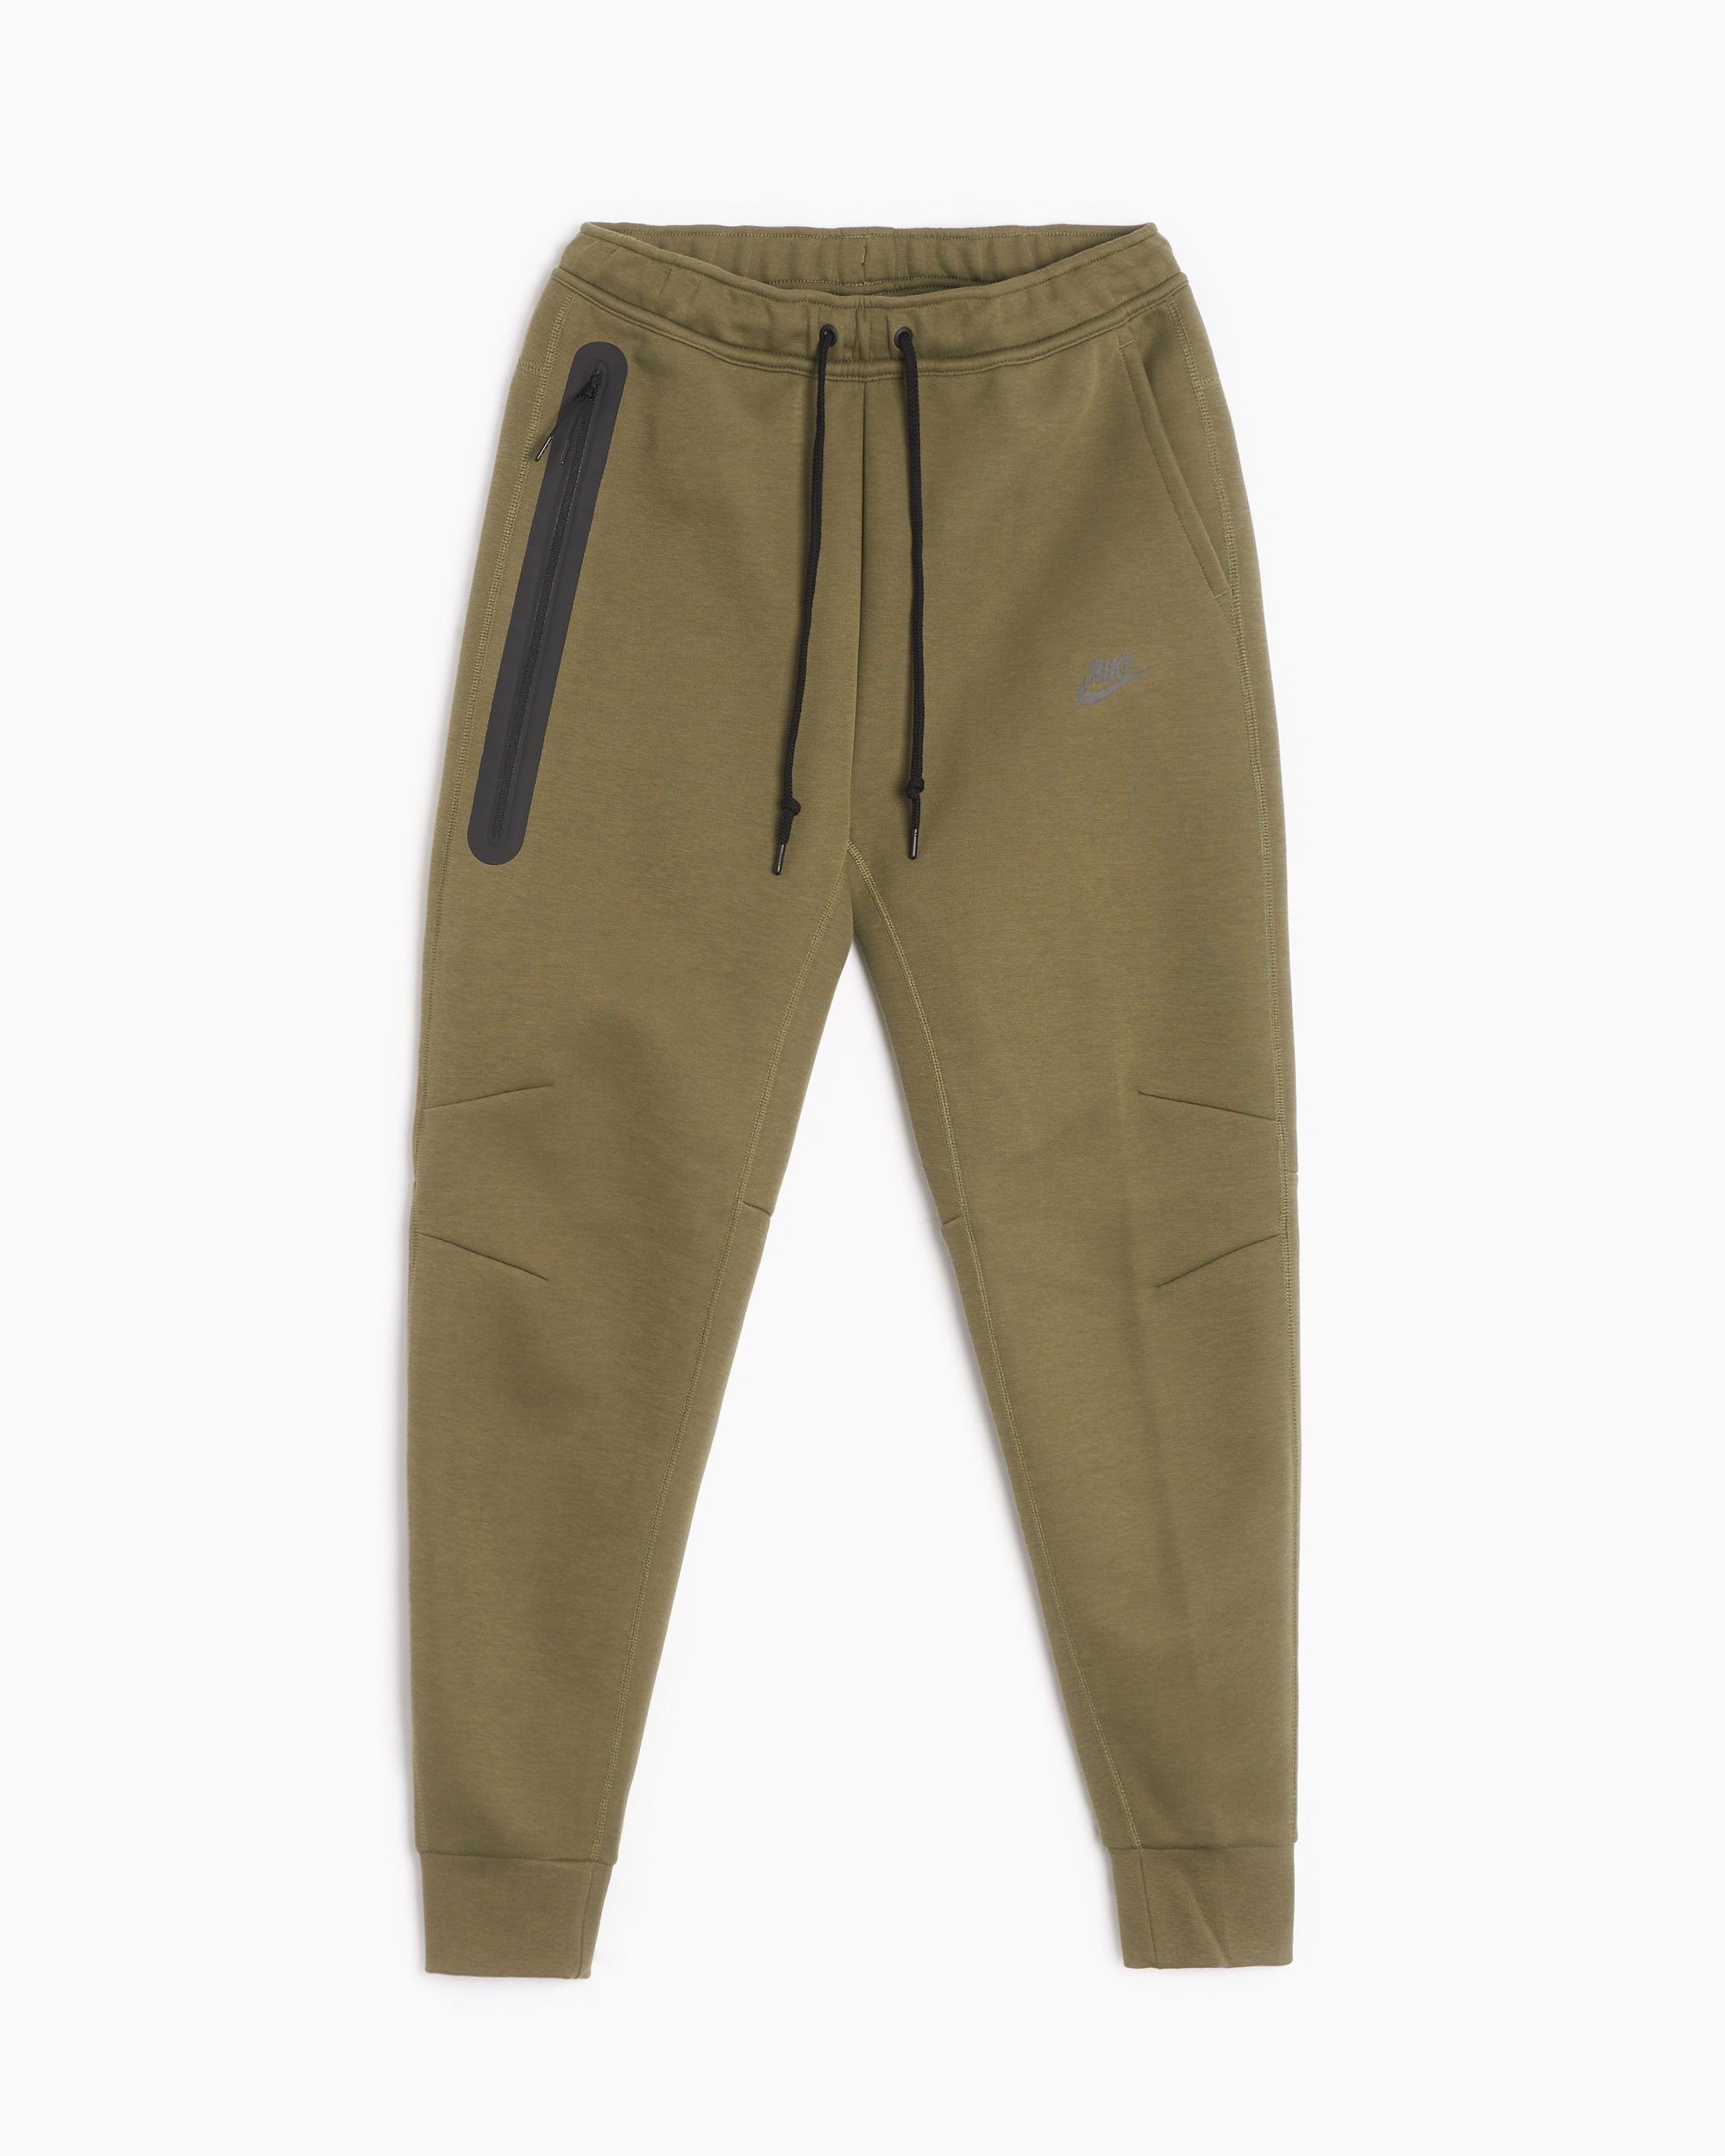 Nike Size S L XL XL-Tall Men's Sportswear Tech Fleece Joggers Pants NEW  COLOR